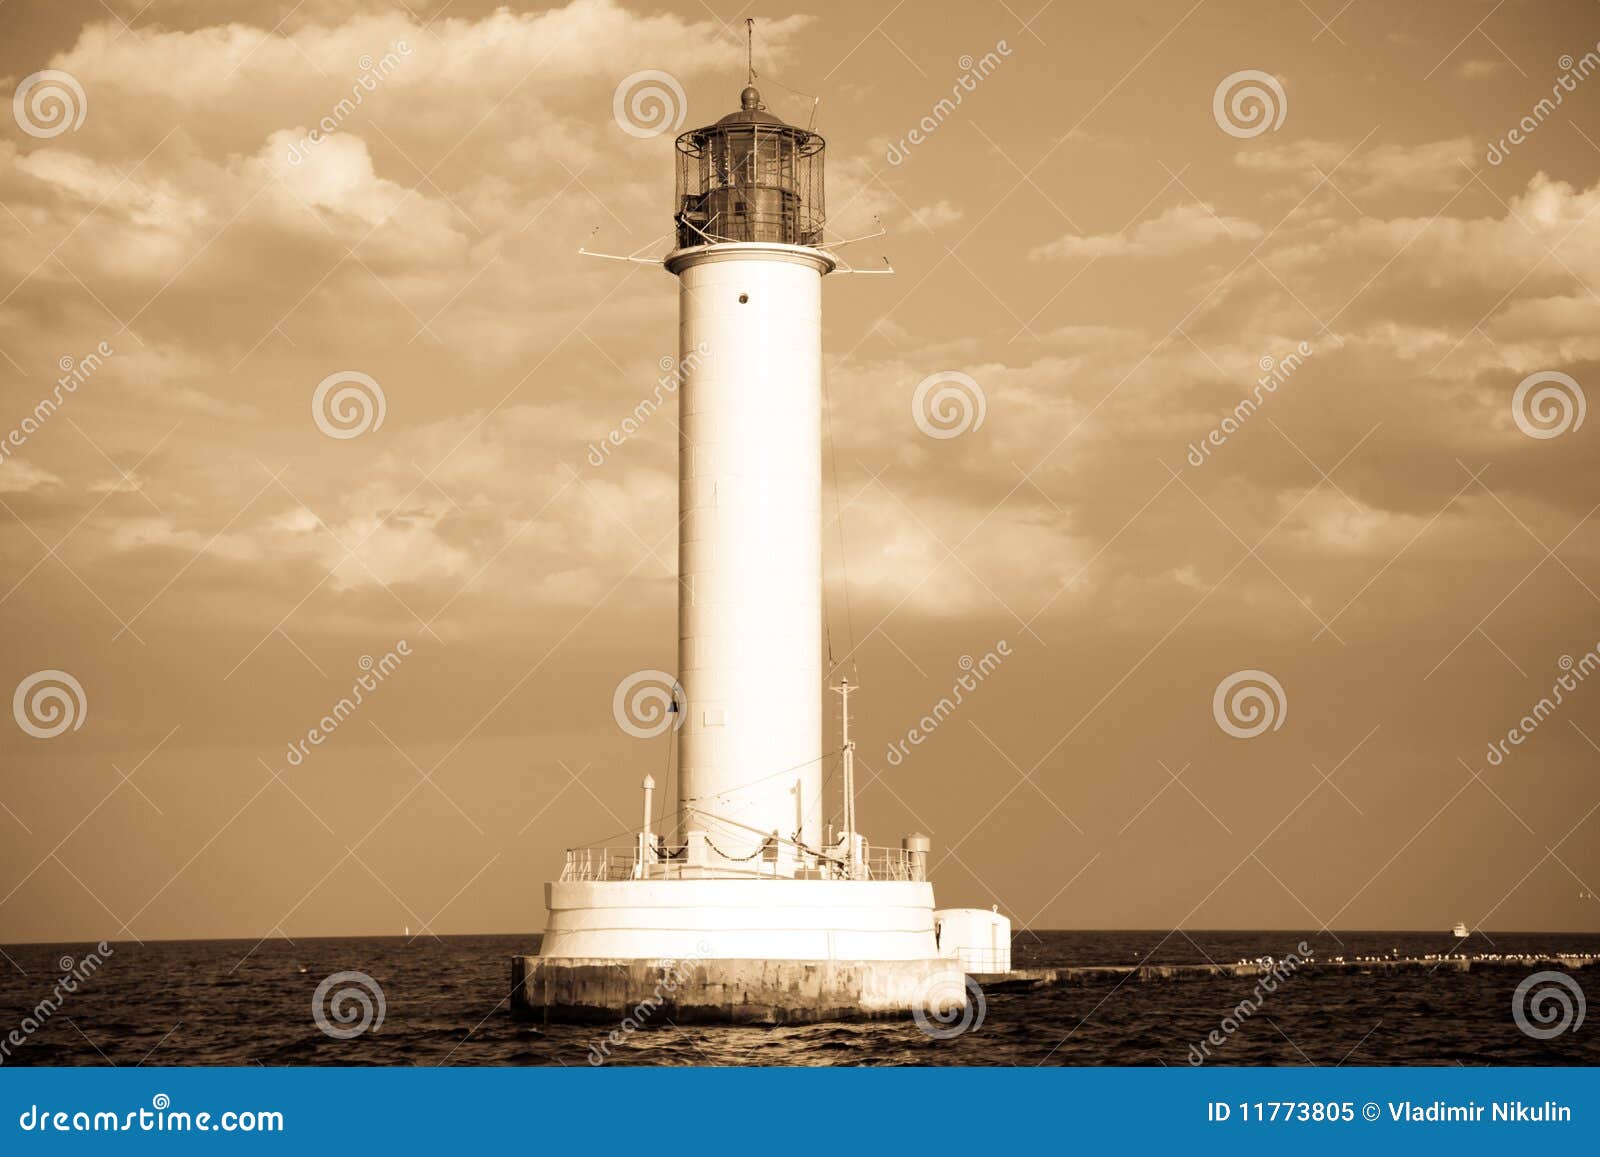 lighthouse in odessa ukraine, photo in vintage sty